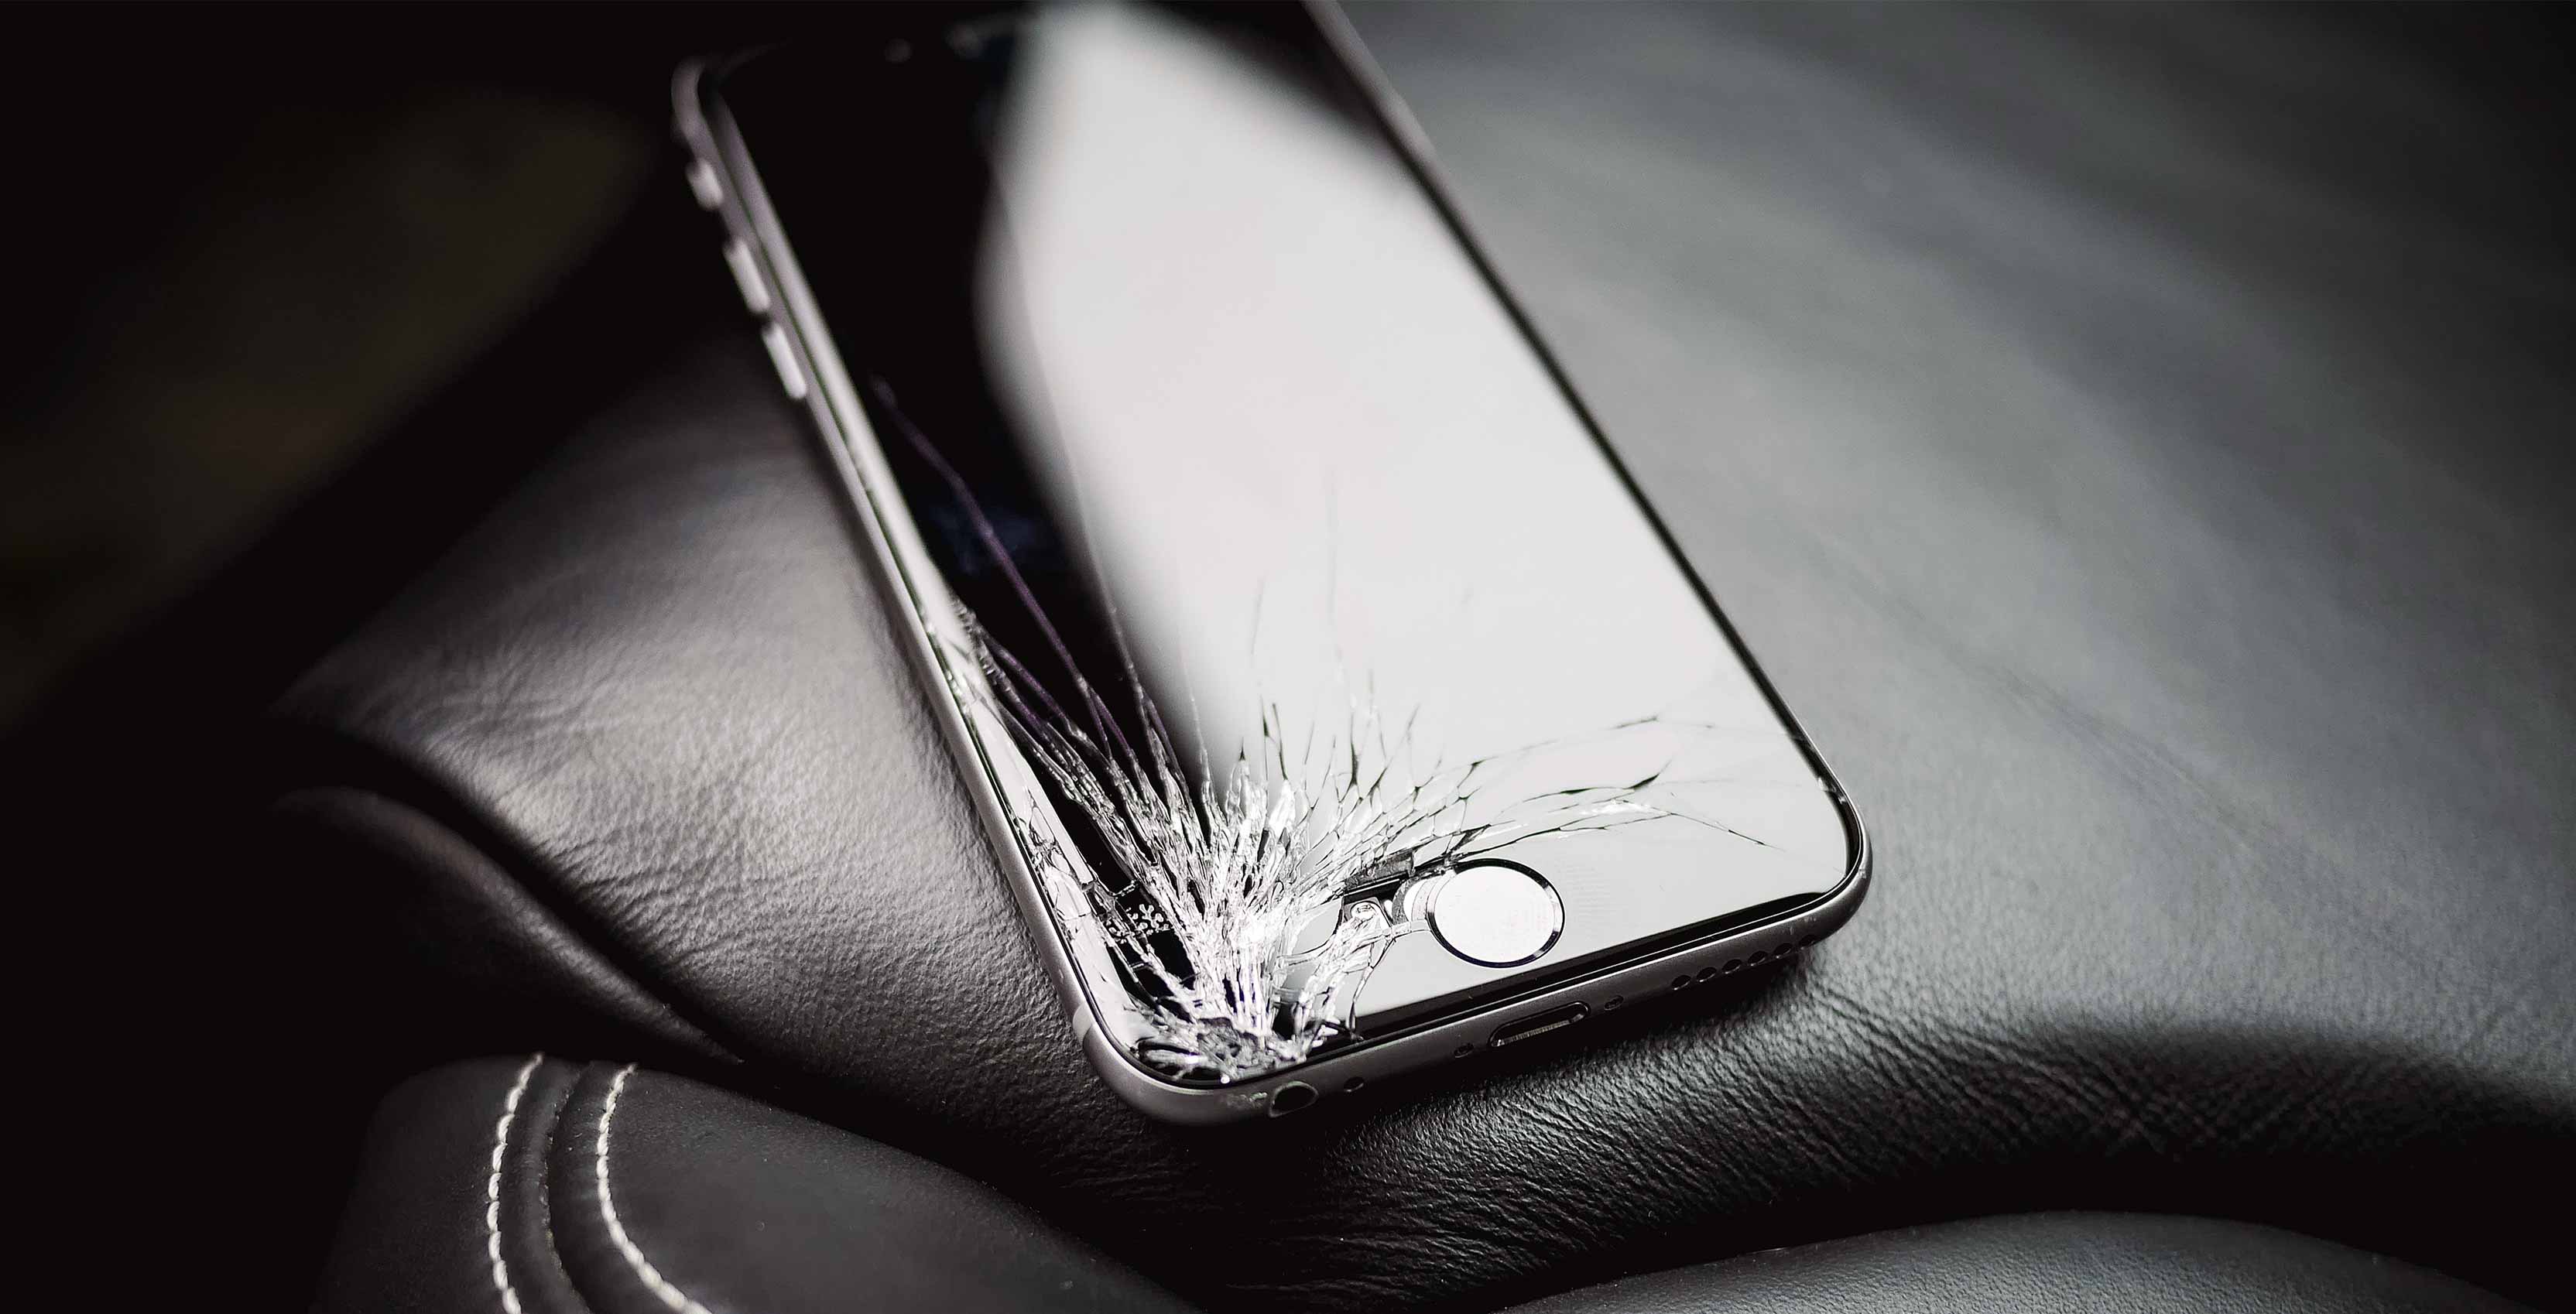 broken iphone on leather car seat - asurion